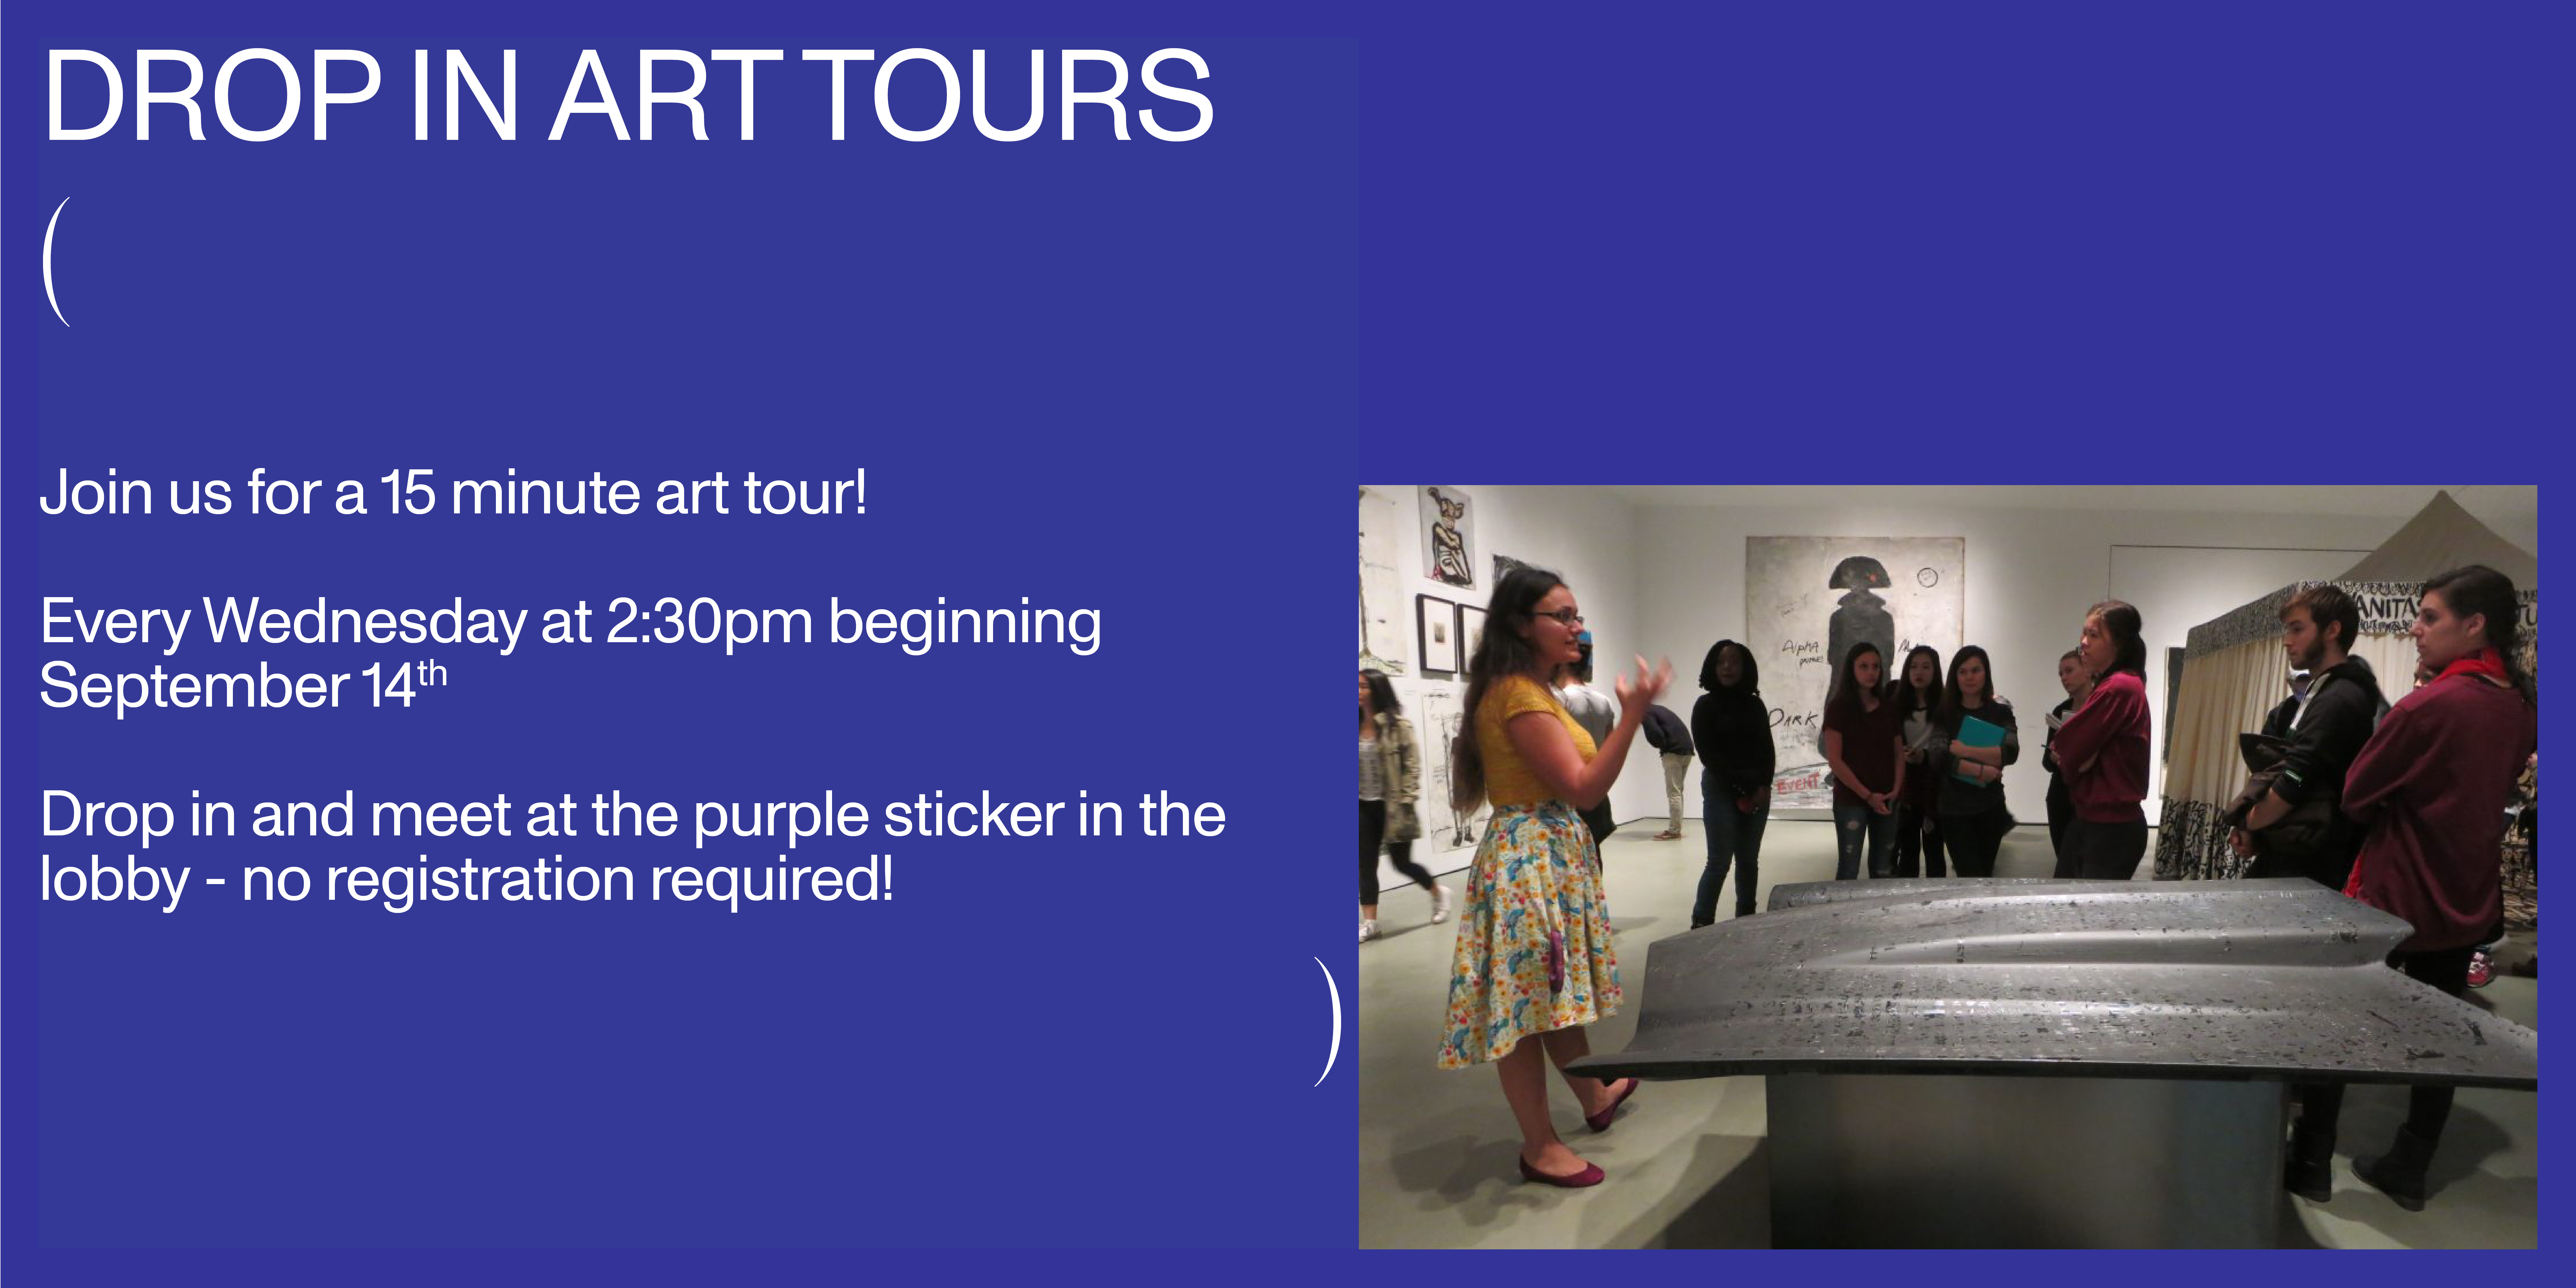 Drop in art tours